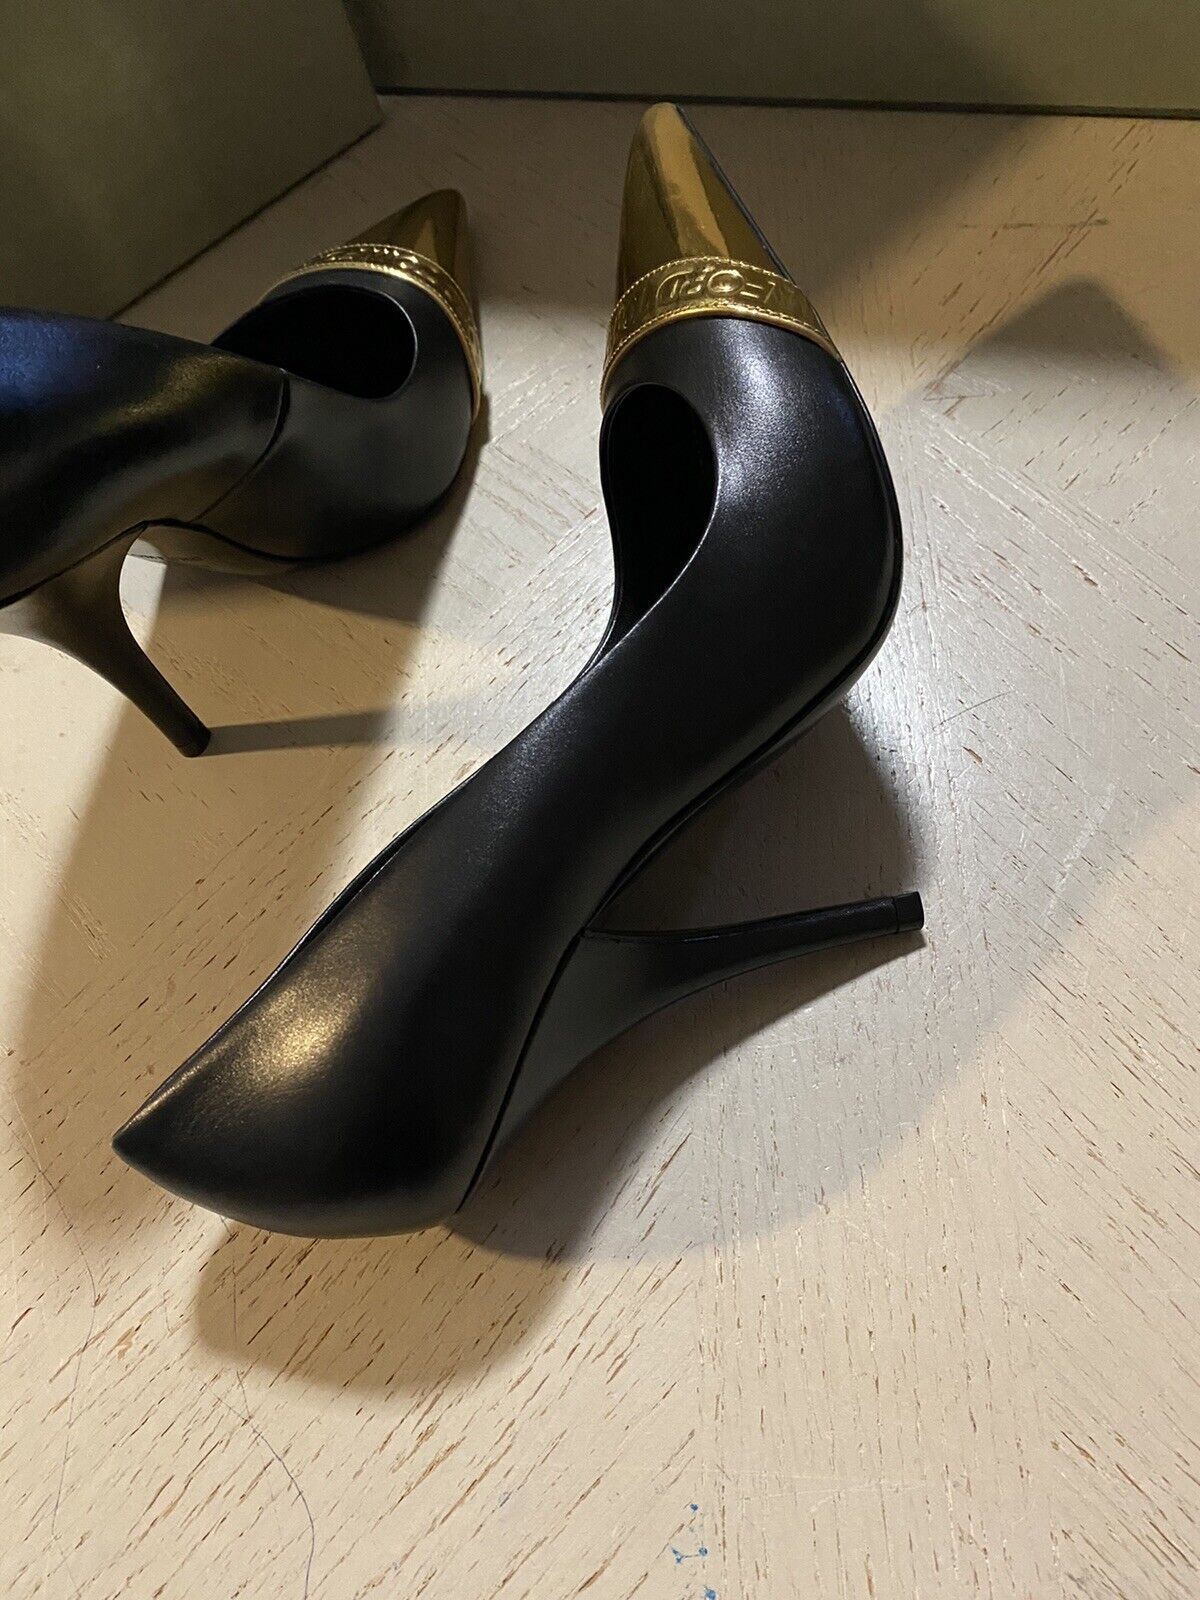 NIB $1150 TOM FORD Women’s Metallic Cap-Toe Logo Pumps Shoes Black/Gold 8/38 Eu